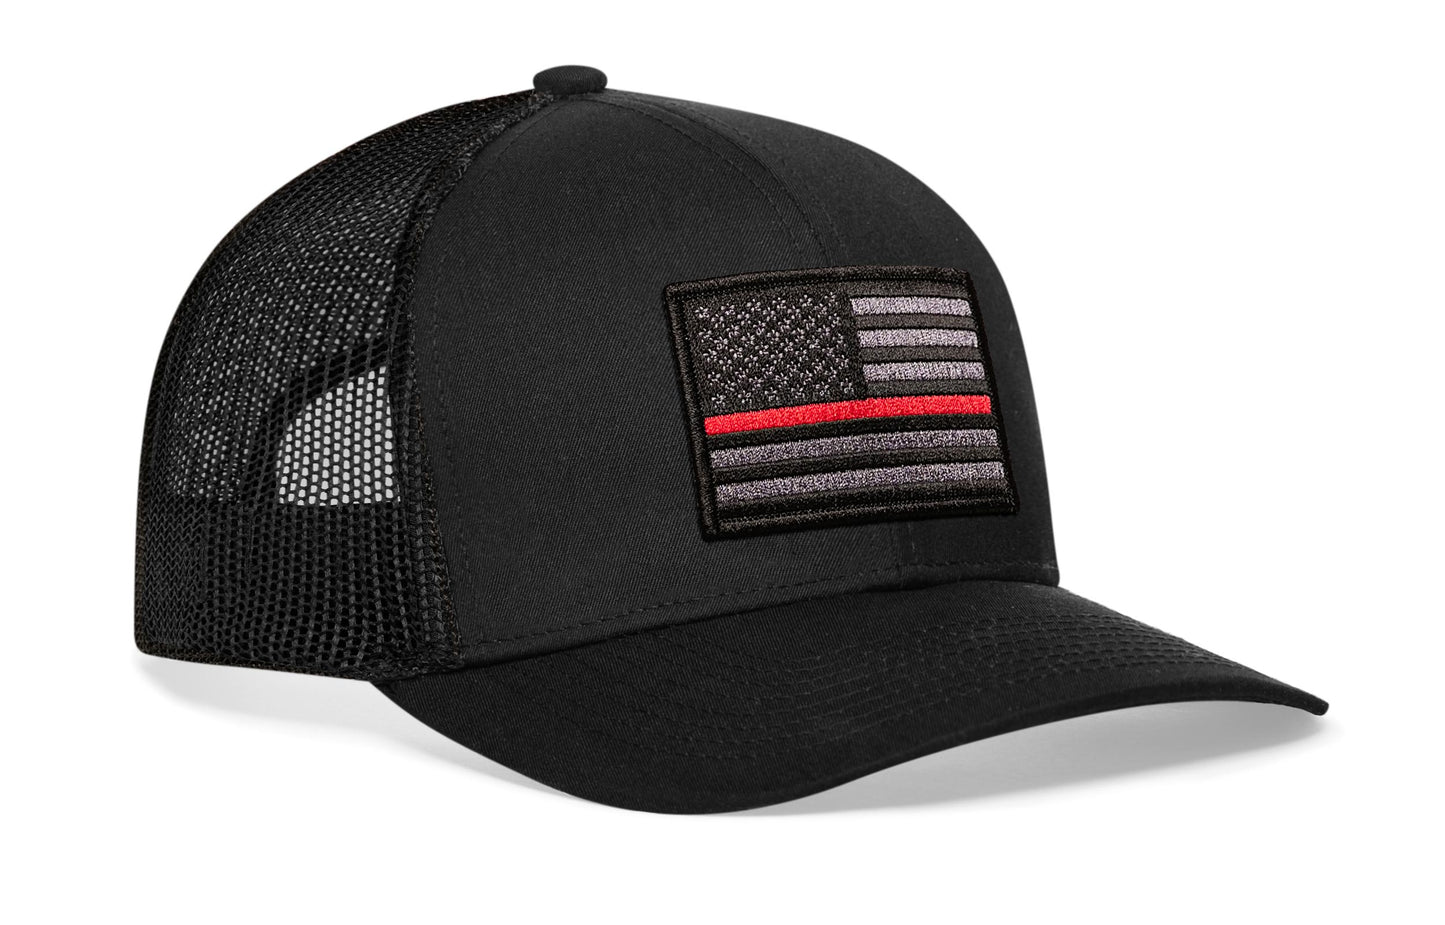 Thin Red Line Trucker Hat  |  Black Fire Snapback